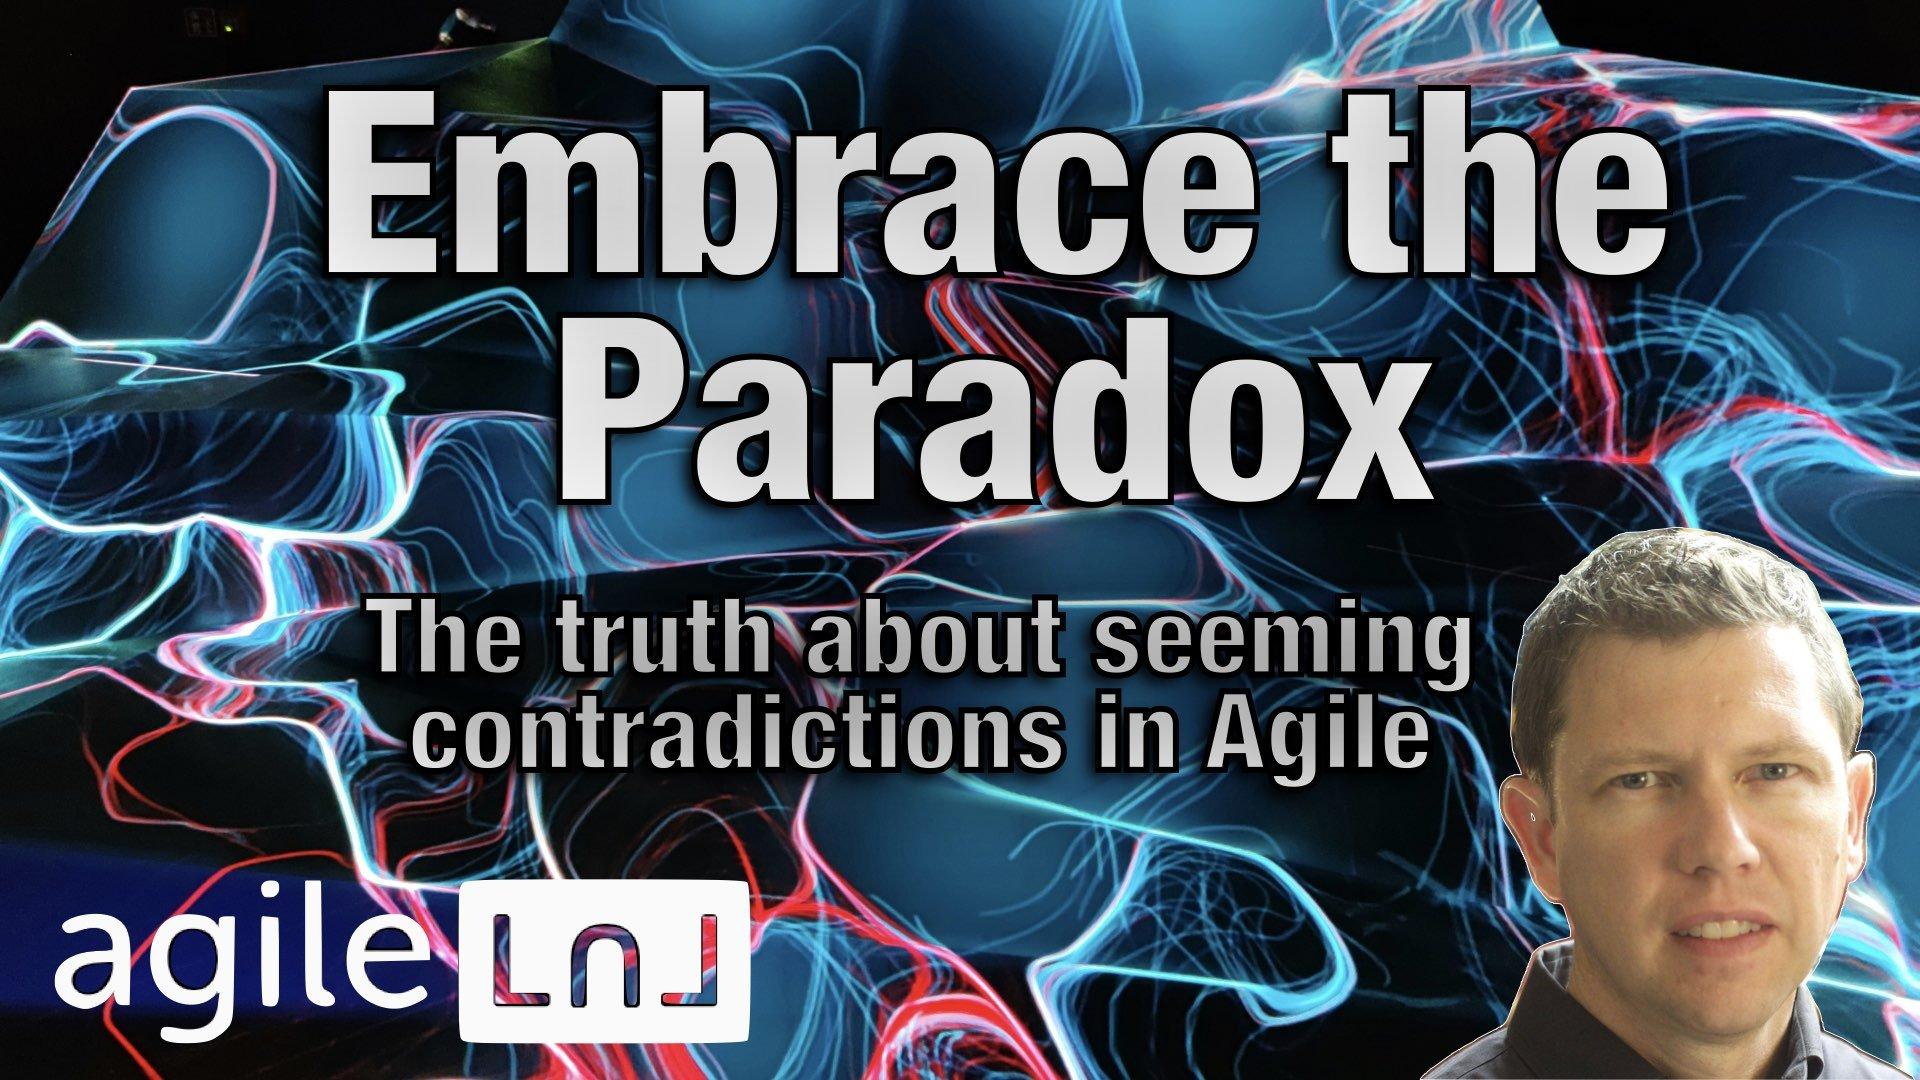 Embrace the Paradox - AgileLnL